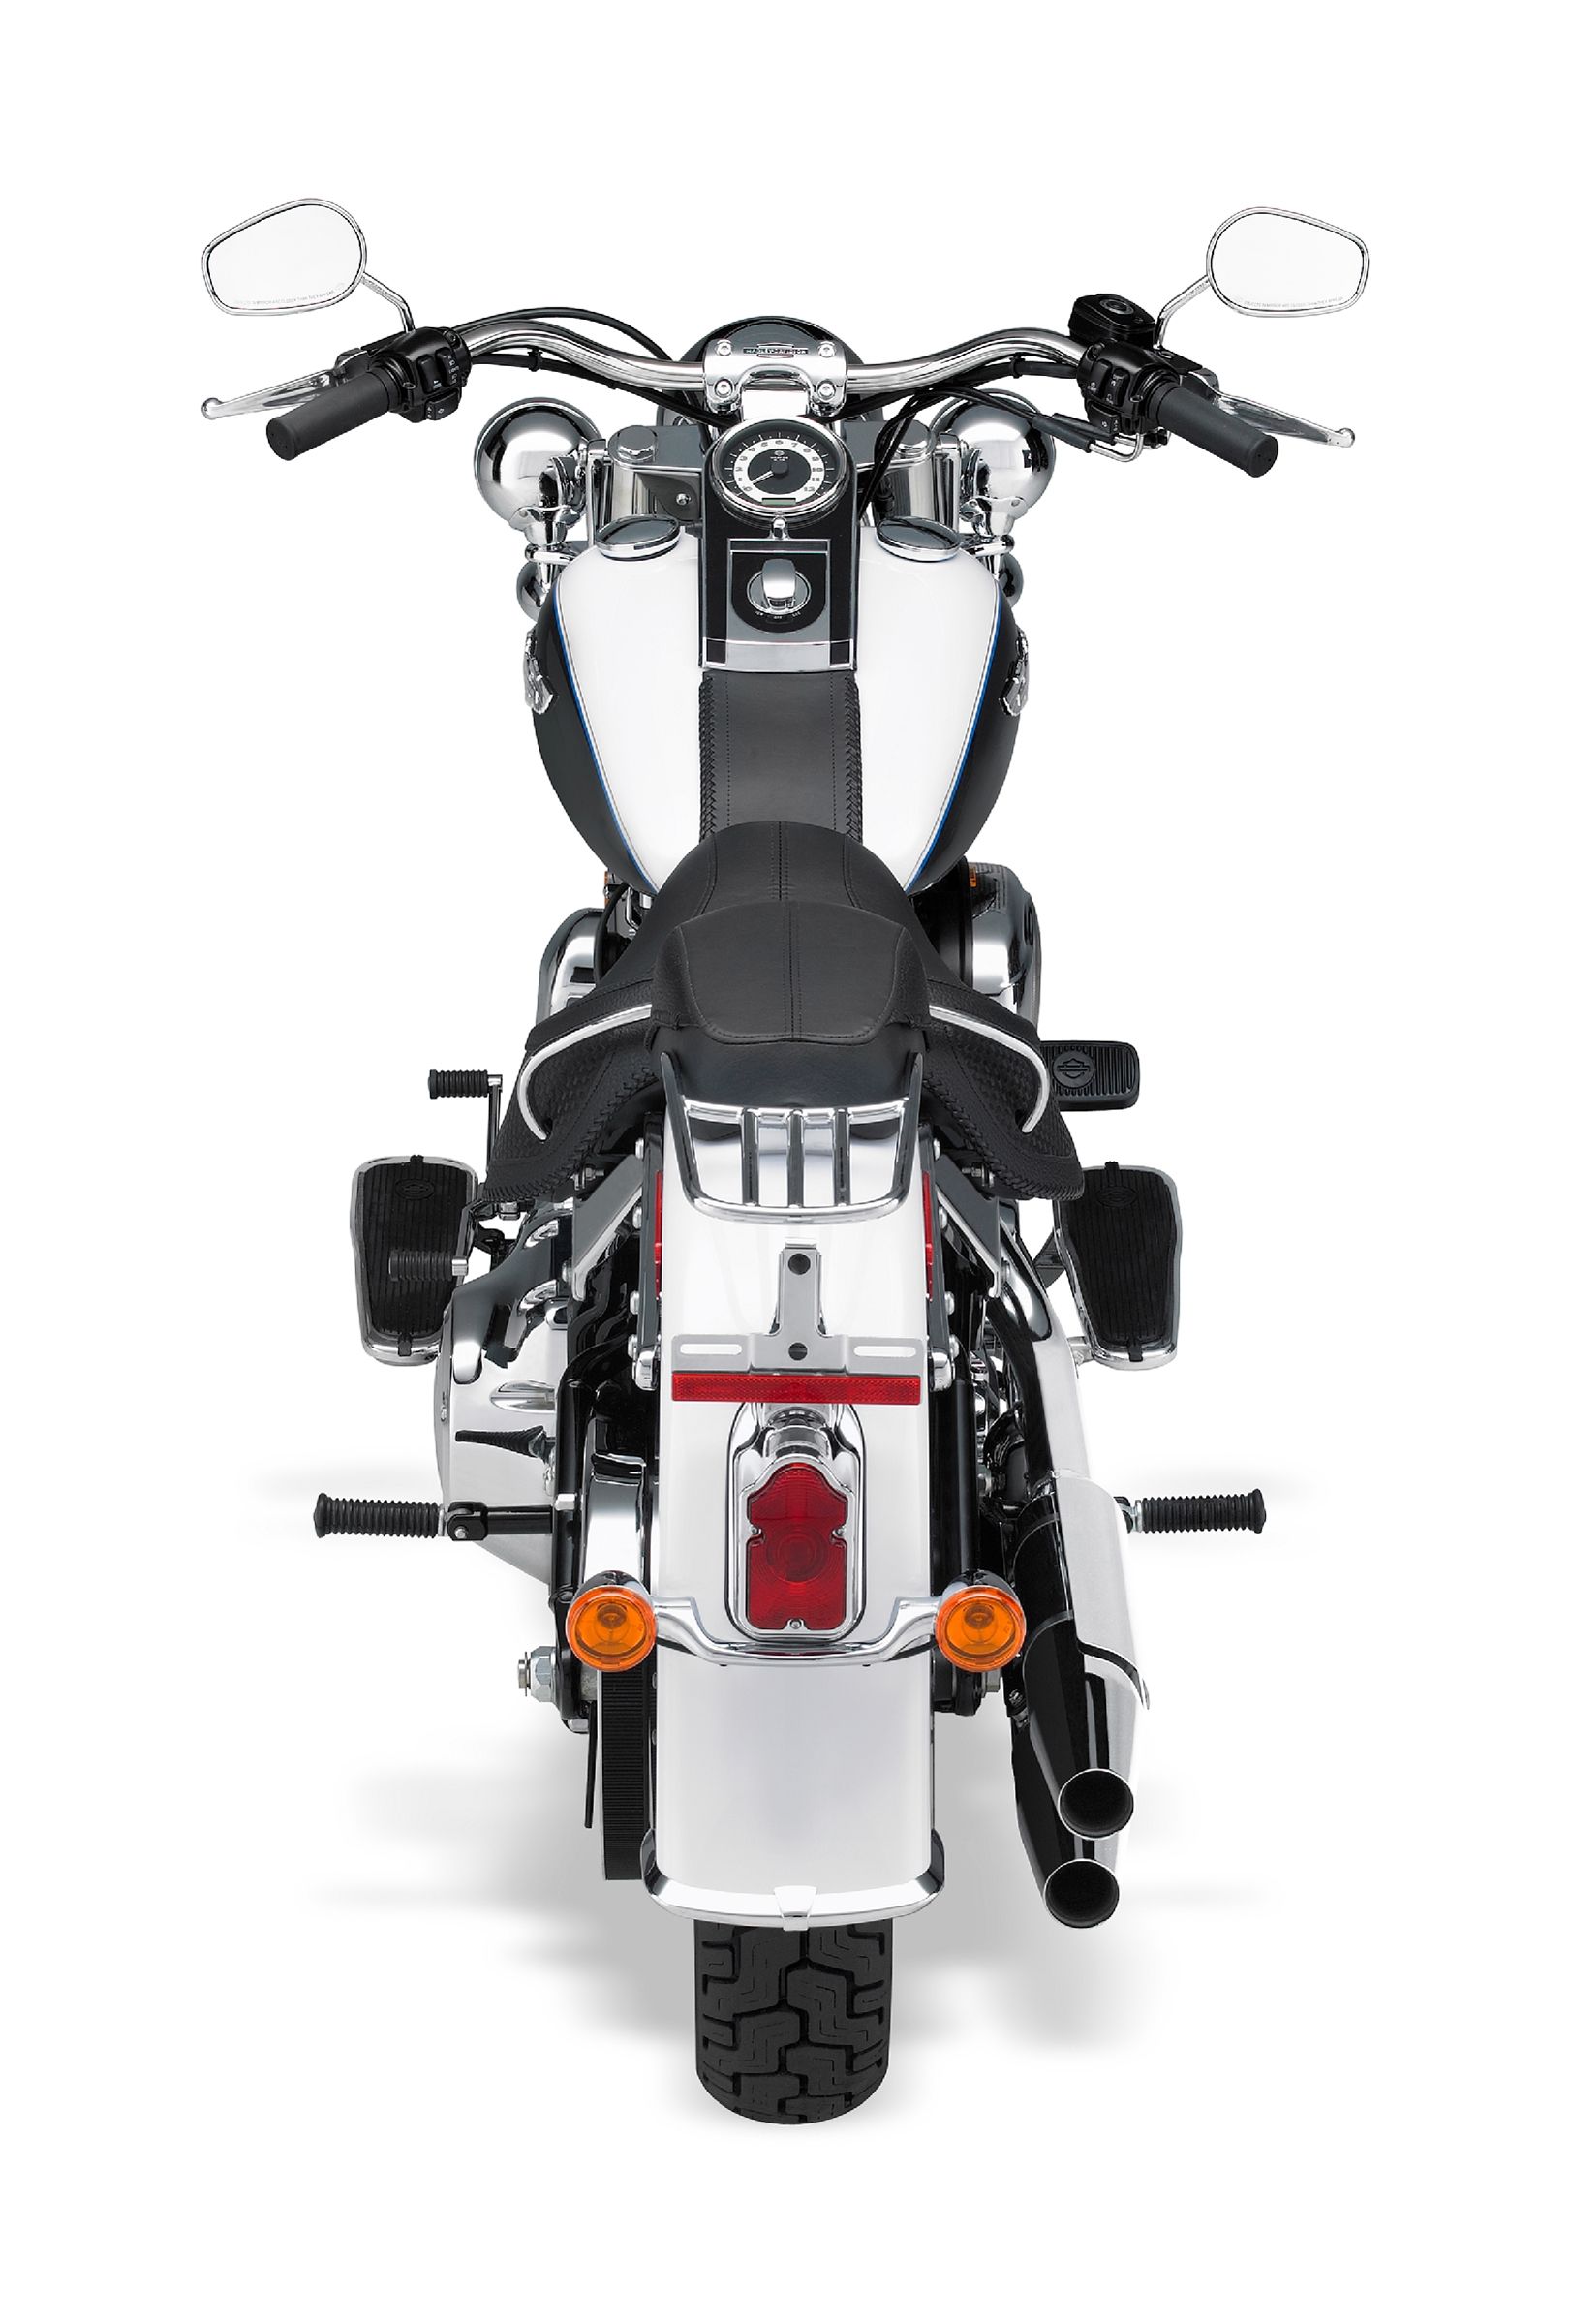  2009 Harley-Davidson Softail Deluxe